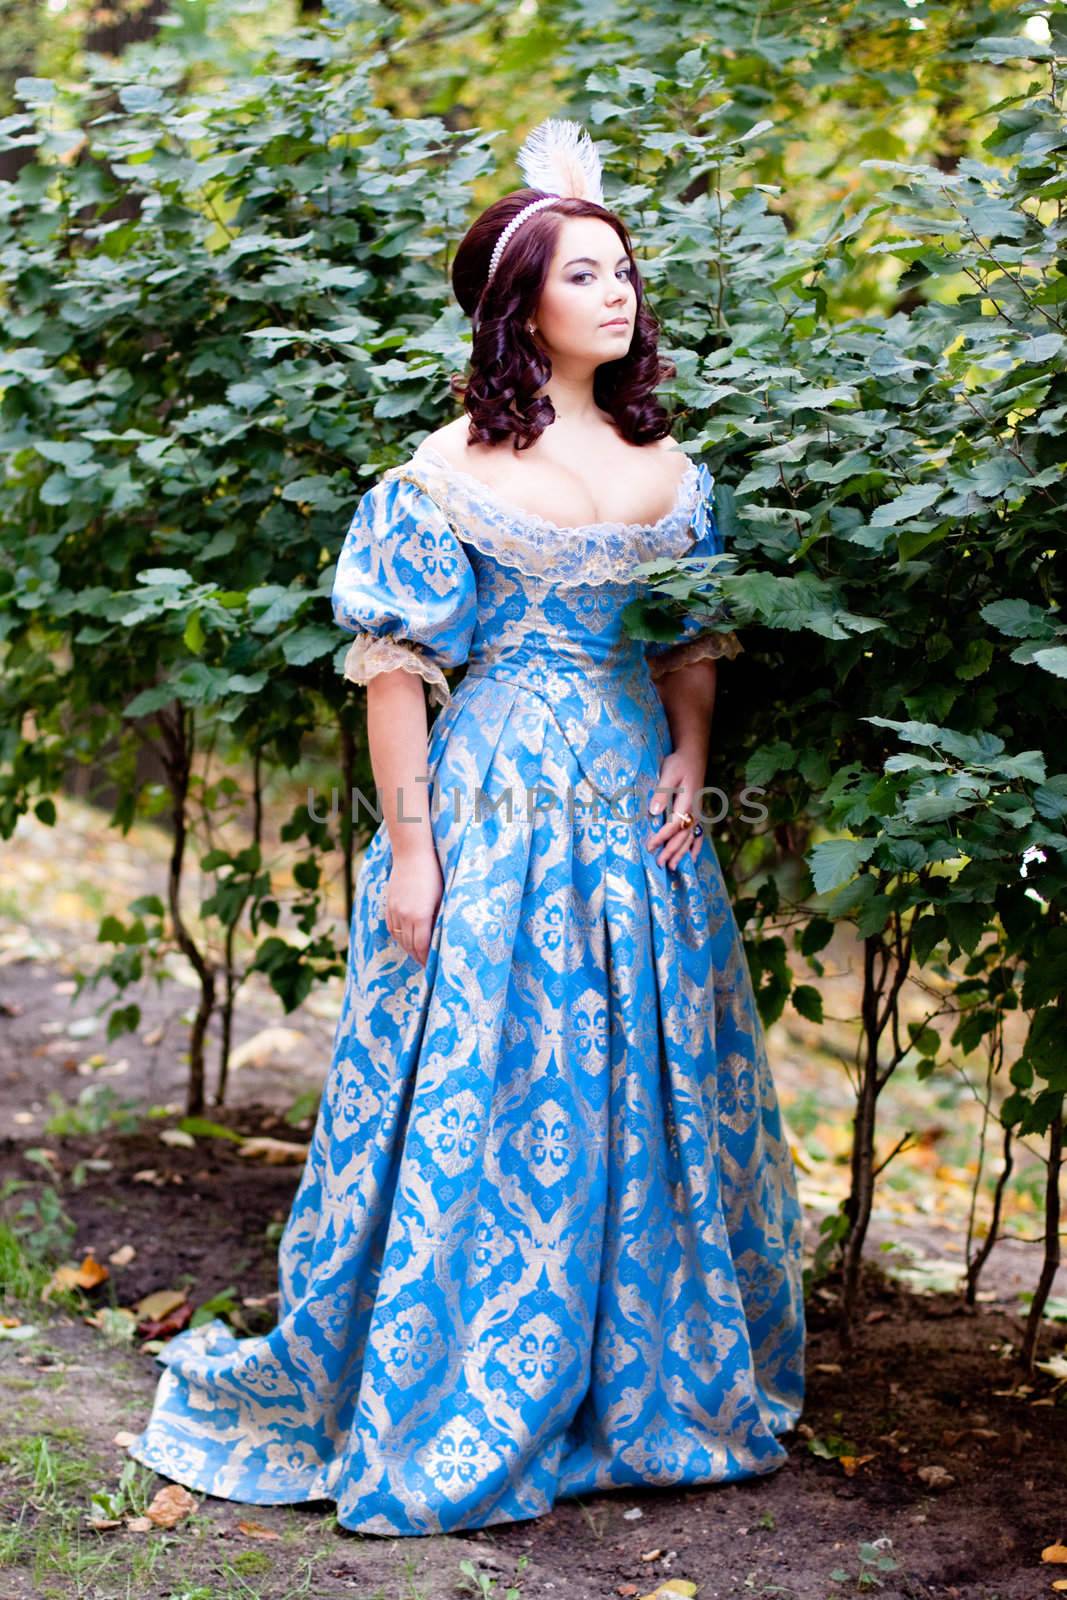 A portrait of lady in blue baroque dress
